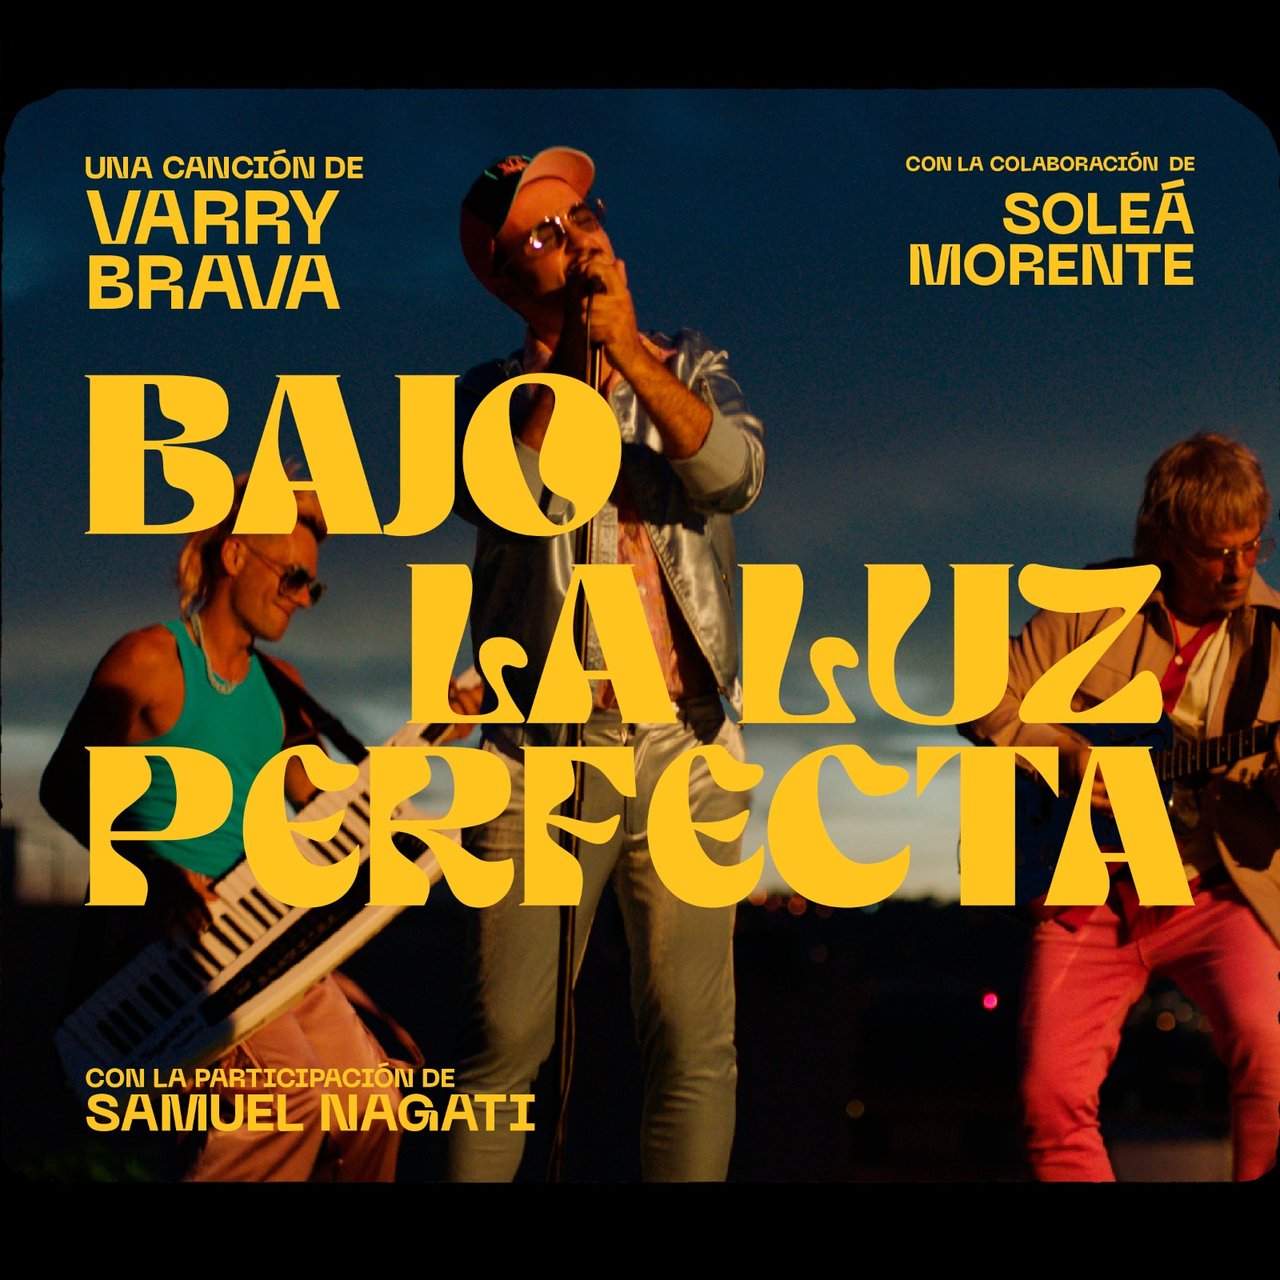 Varry Brava & Soleá Morente ft. featuring Samuel Nagati Bajo la Luz Perfecta cover artwork